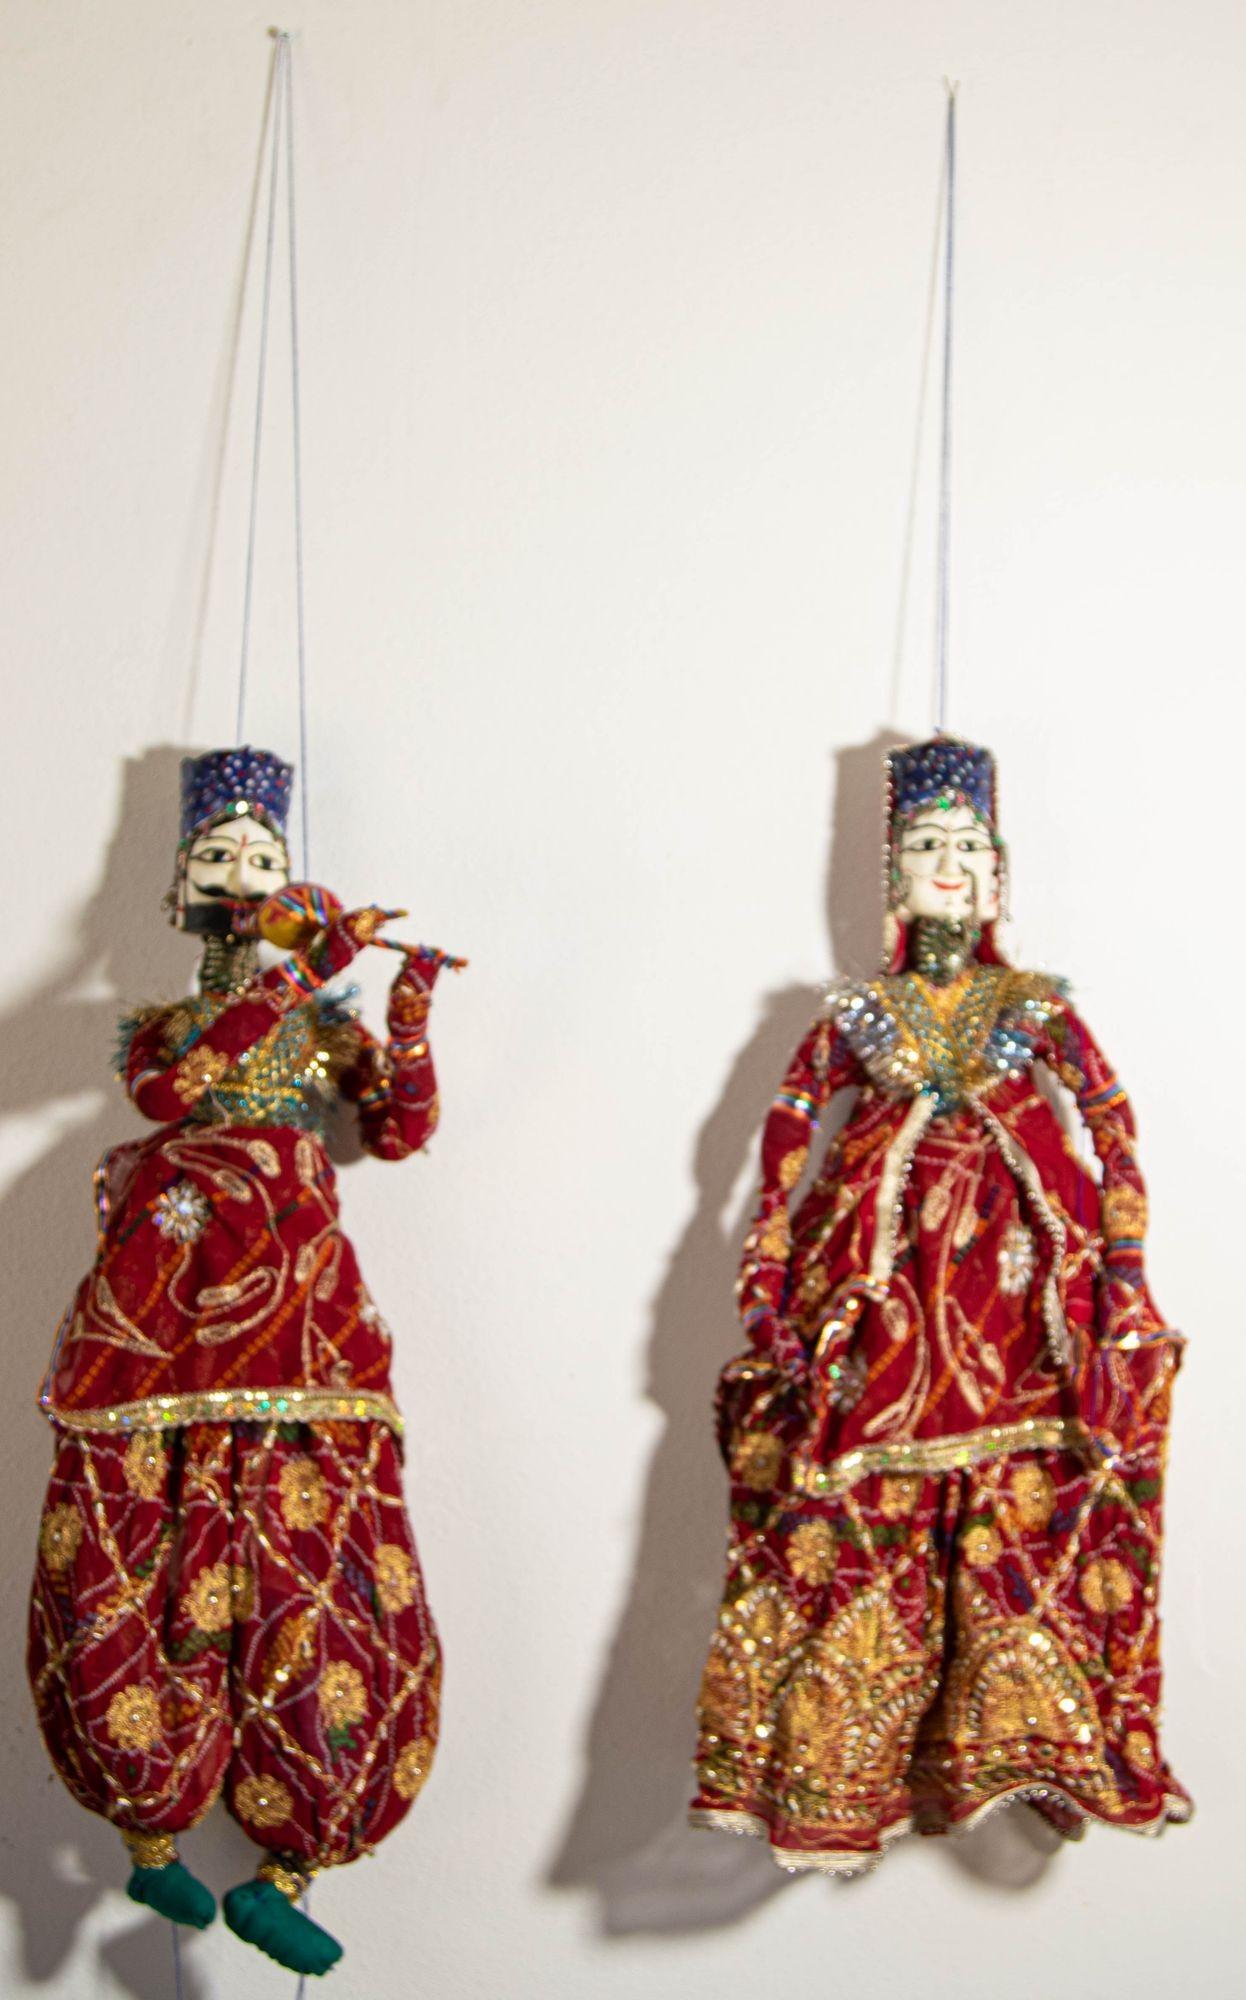 Indian Handmade Rajasthani Kathputli Dancing Puppet Couple Jaipur India 1950s For Sale